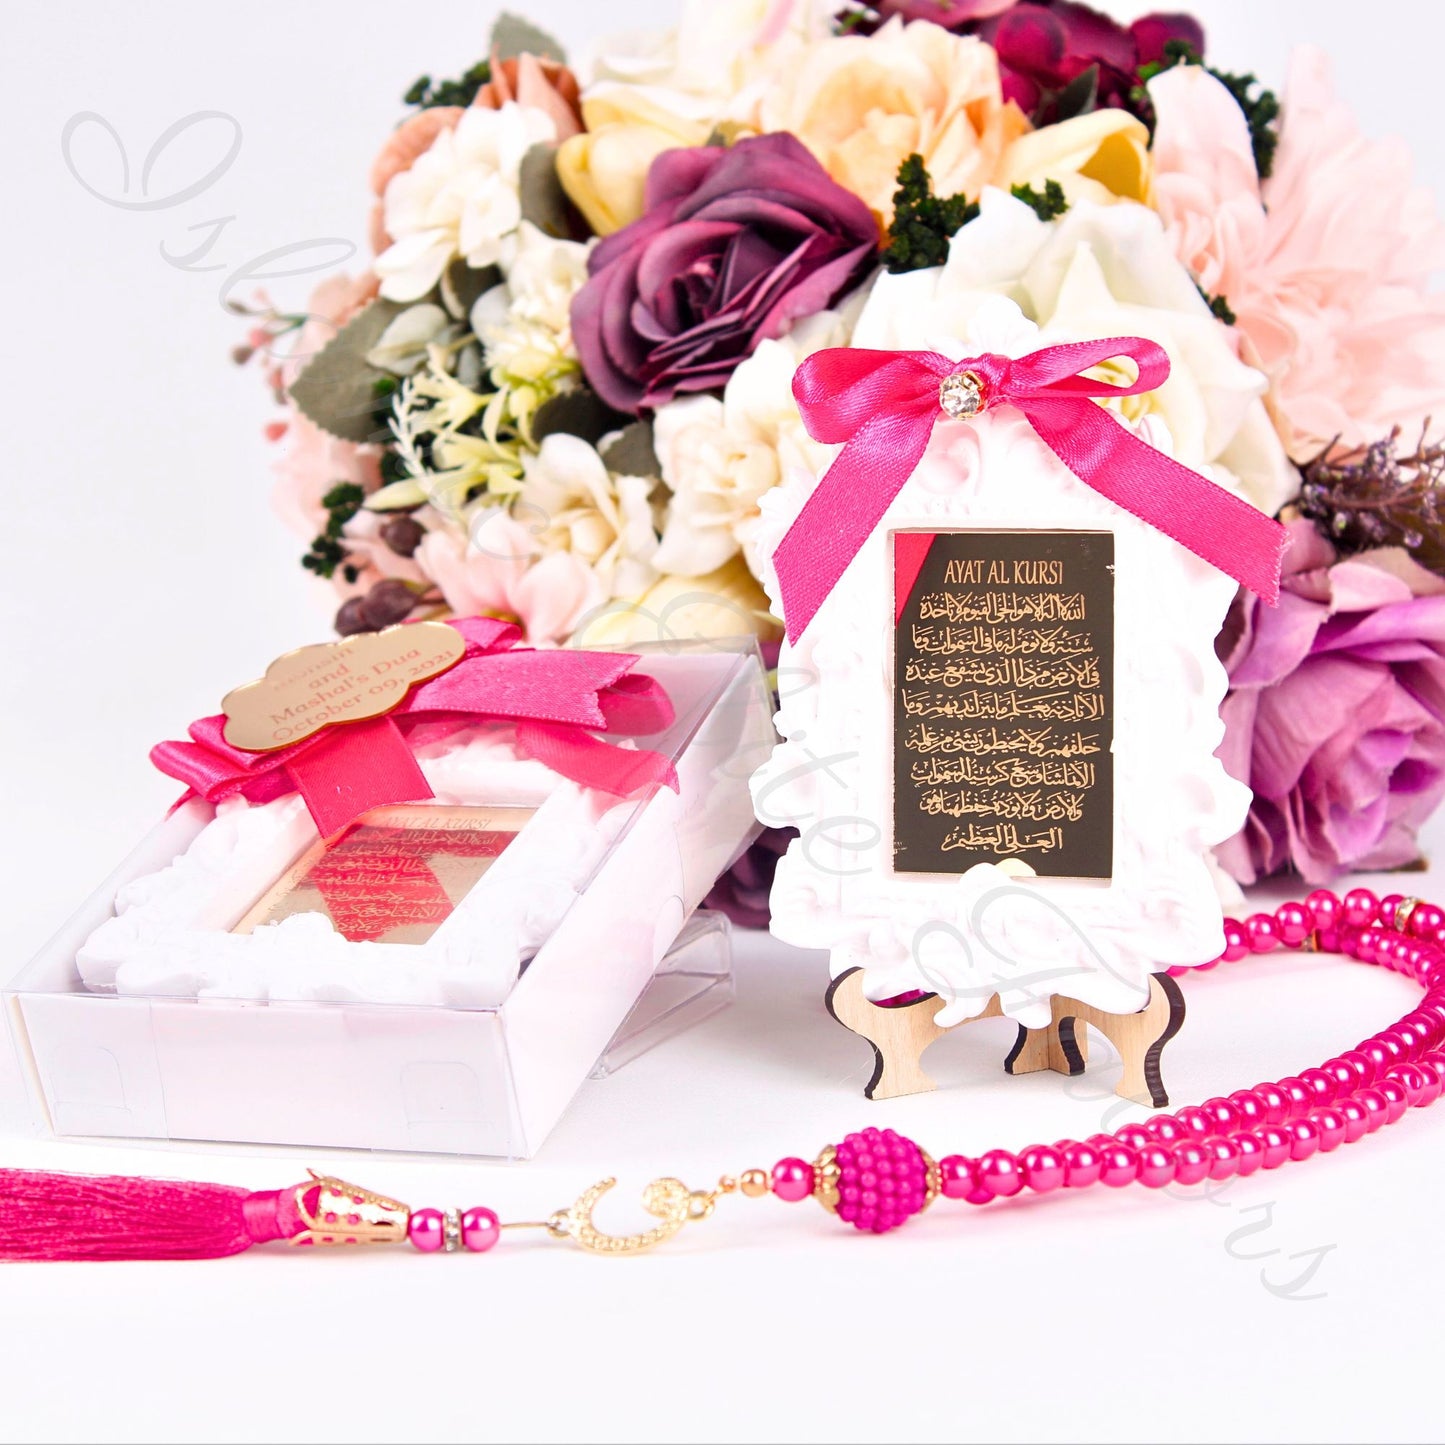 Personalized Wedding Favor Scented Stone Ayatul Kursi on Stand Tasbeeh